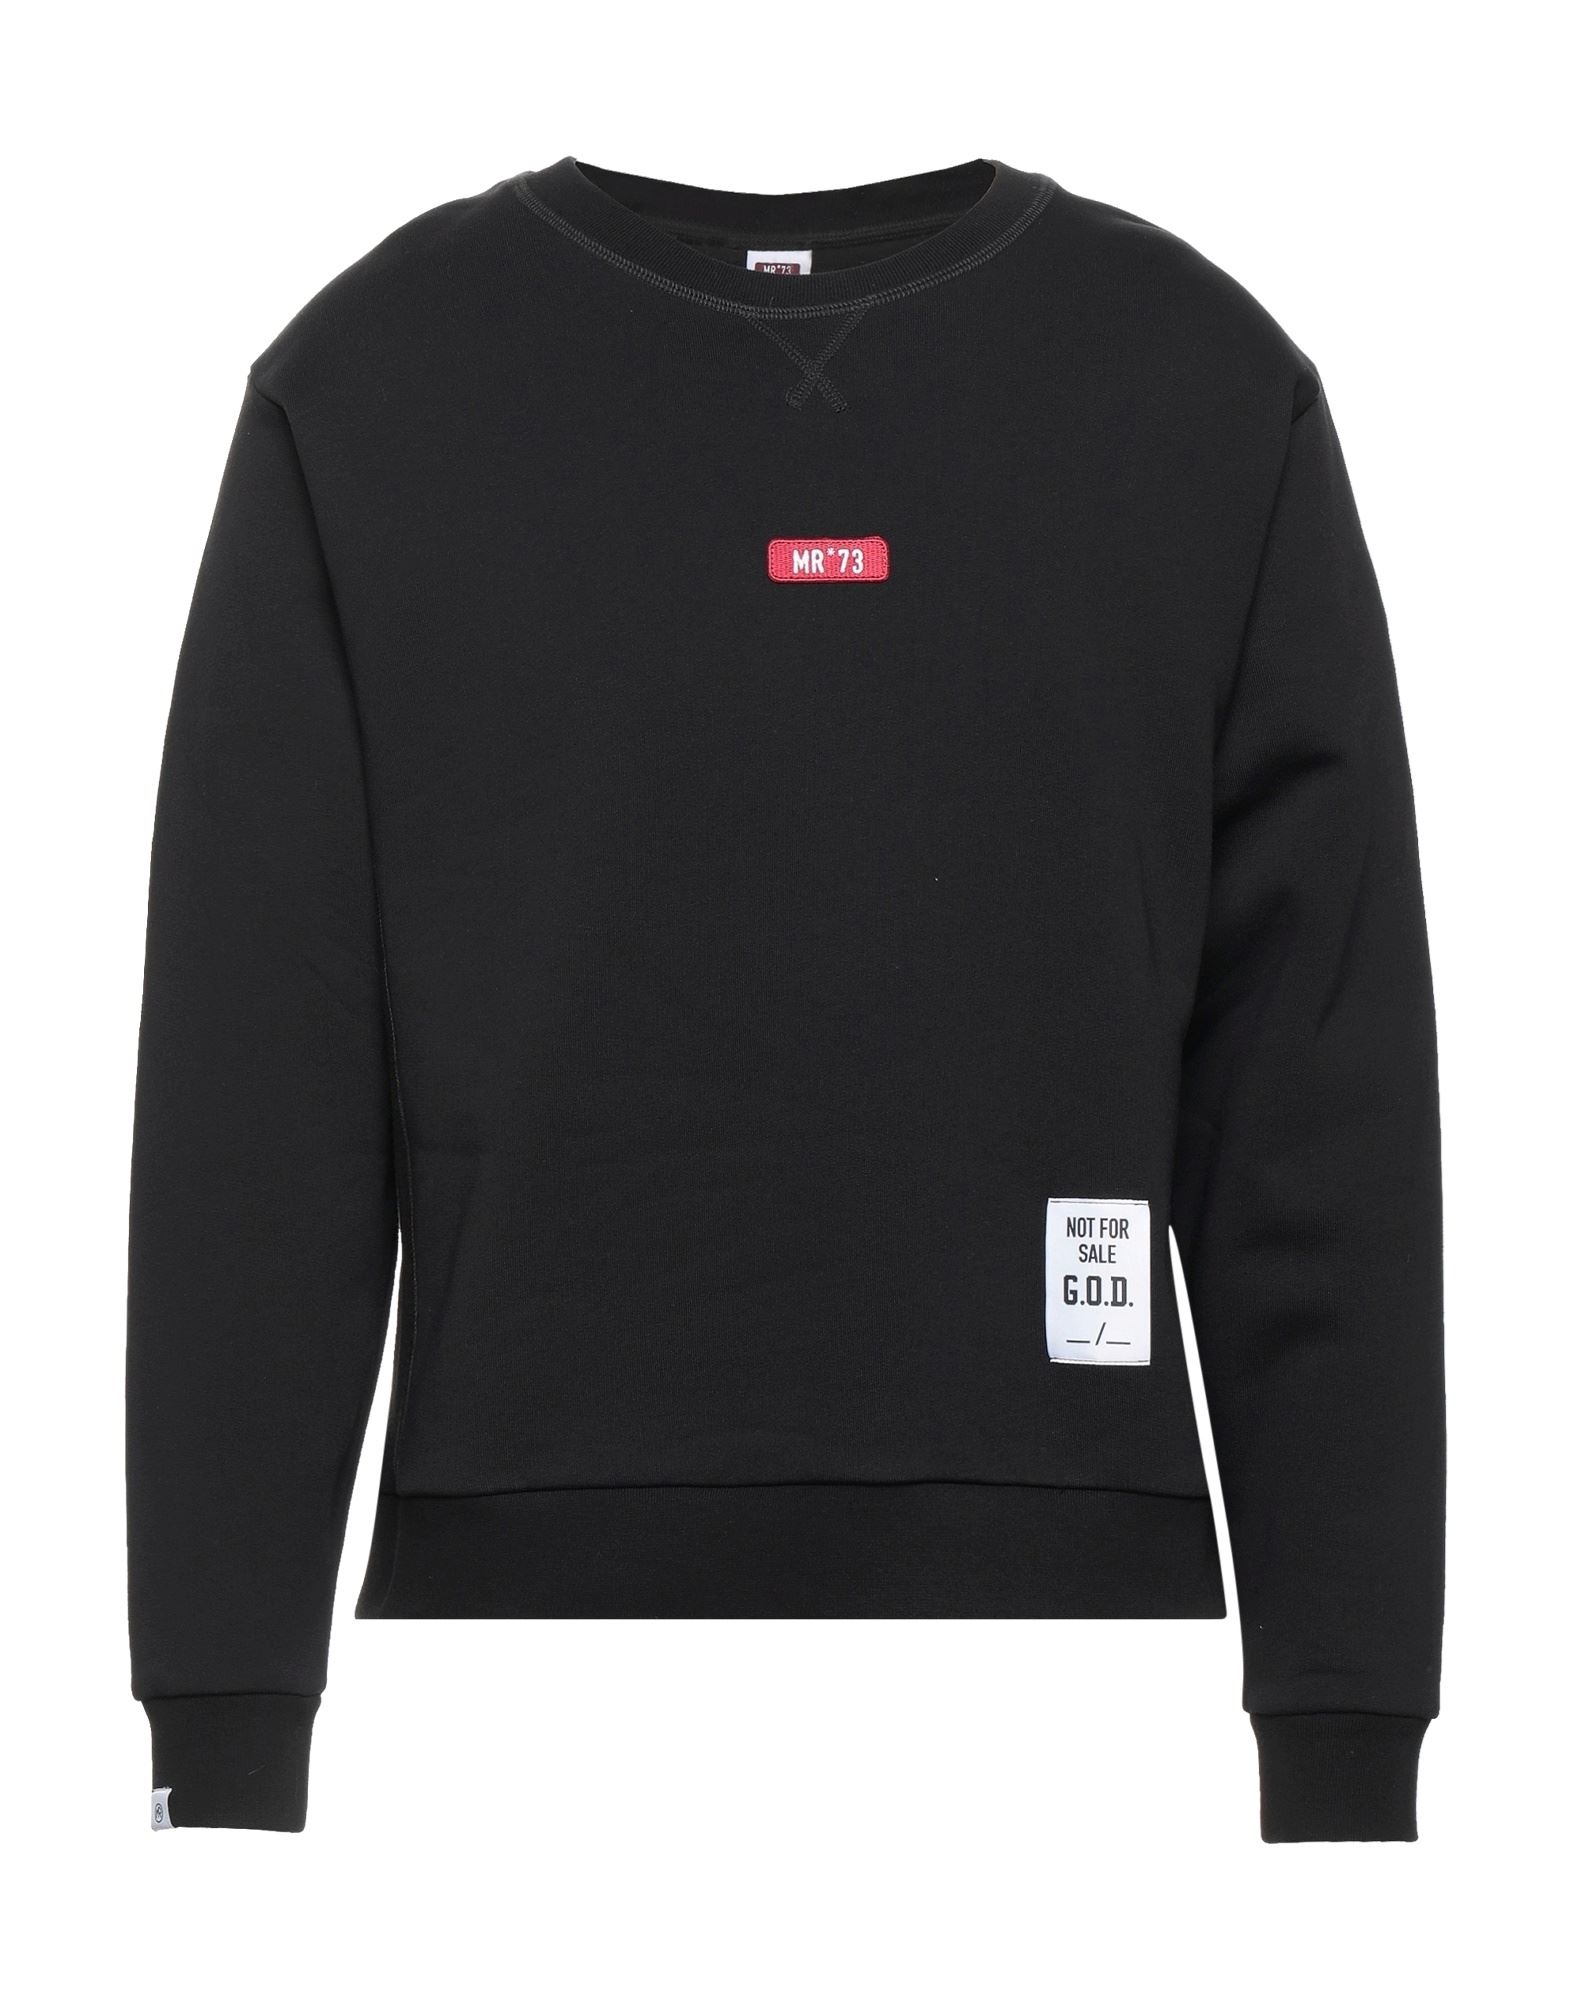 Mr73 Mr*73 Man Sweatshirt Black Size L Cotton